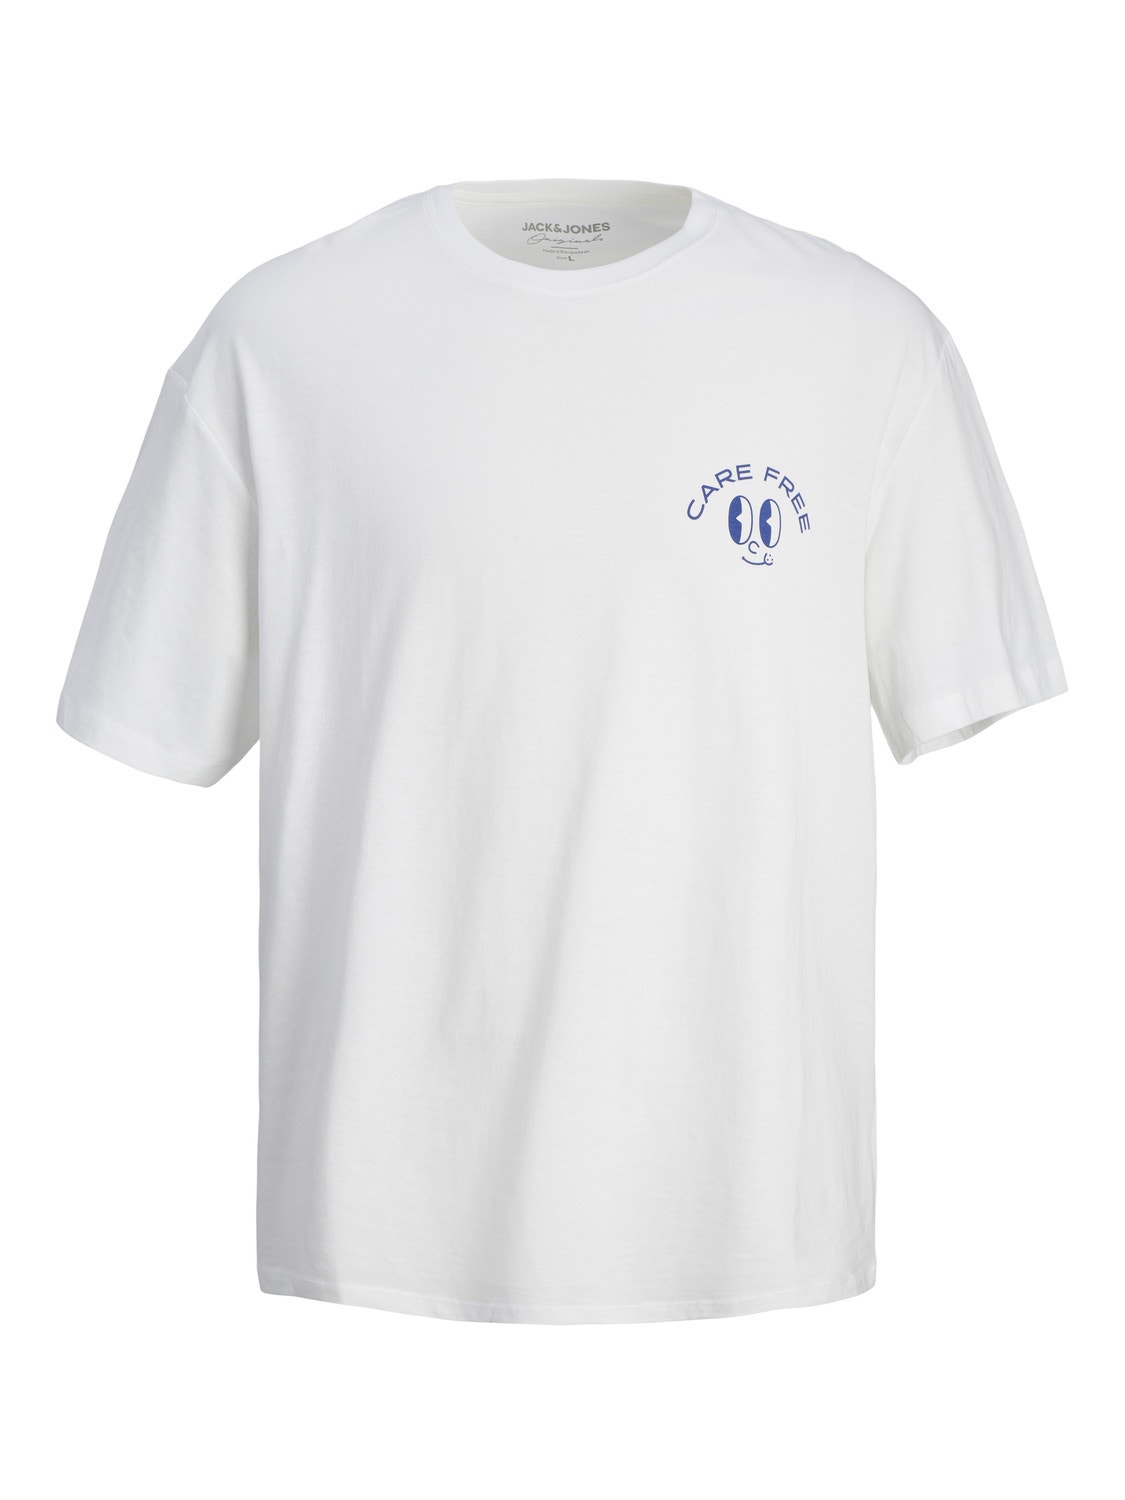 Jack & Jones Plus Size T-shirt Stampato -Bright White - 12261568